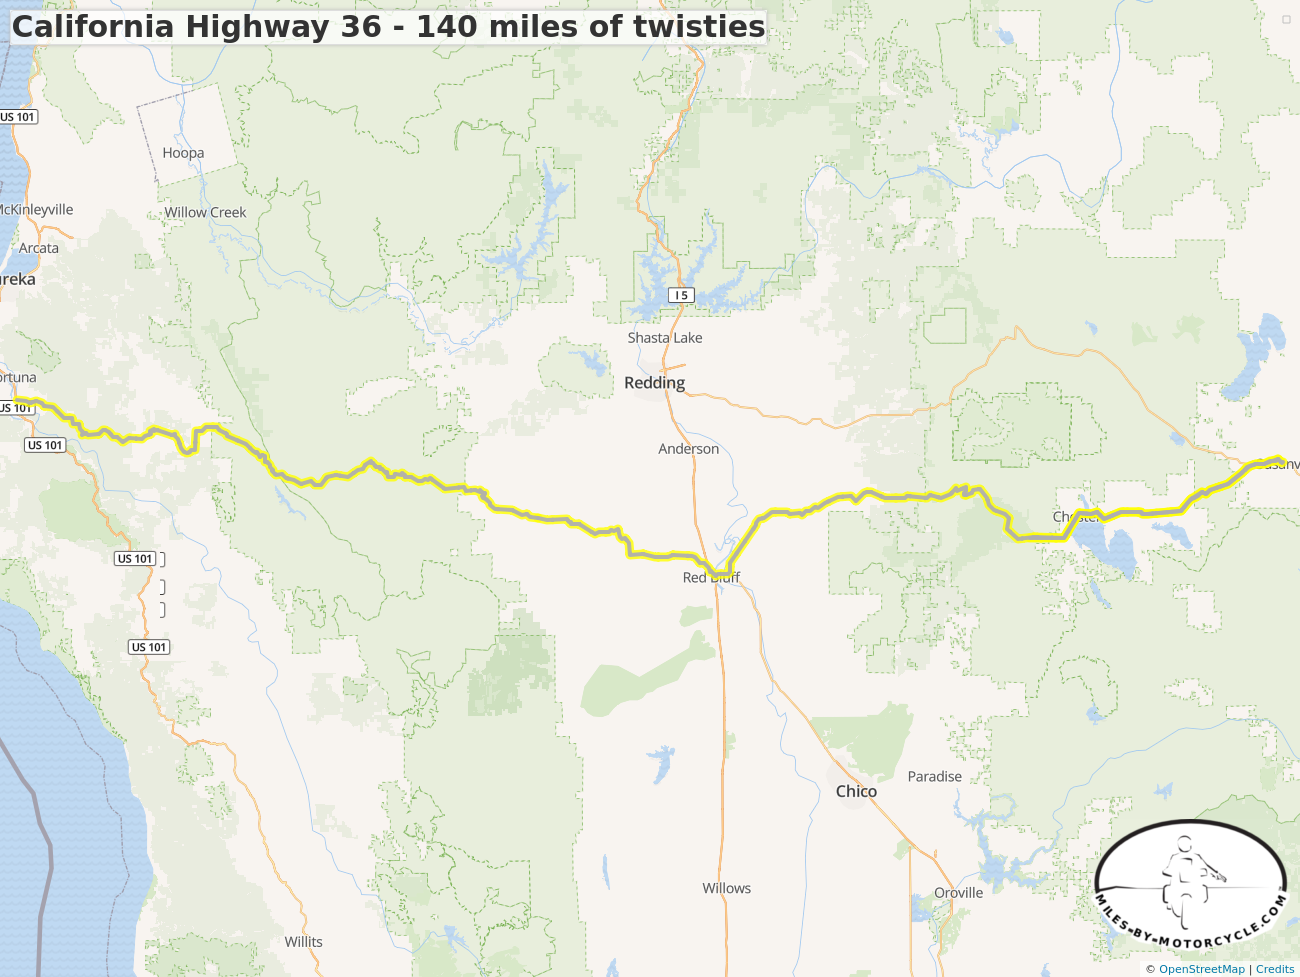 California Highway 36 - 140 miles of twisties